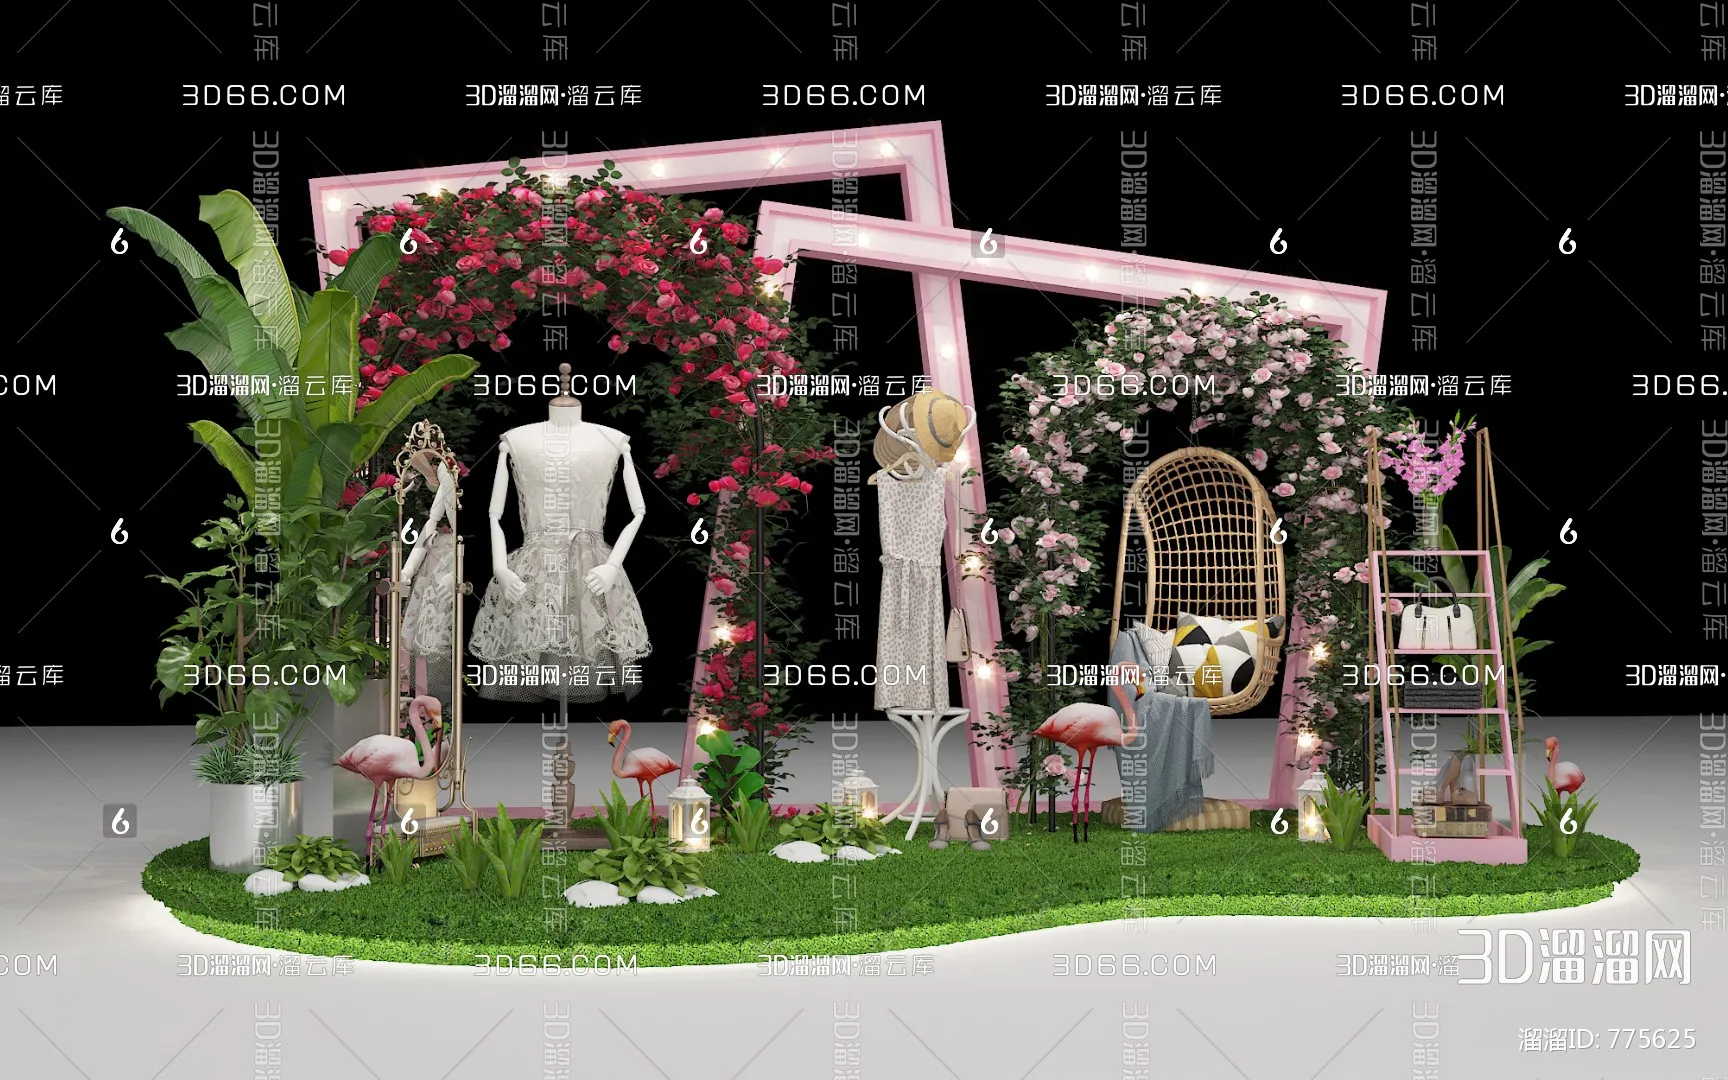 DECORATION – WEDDING 3D MODELS – 033